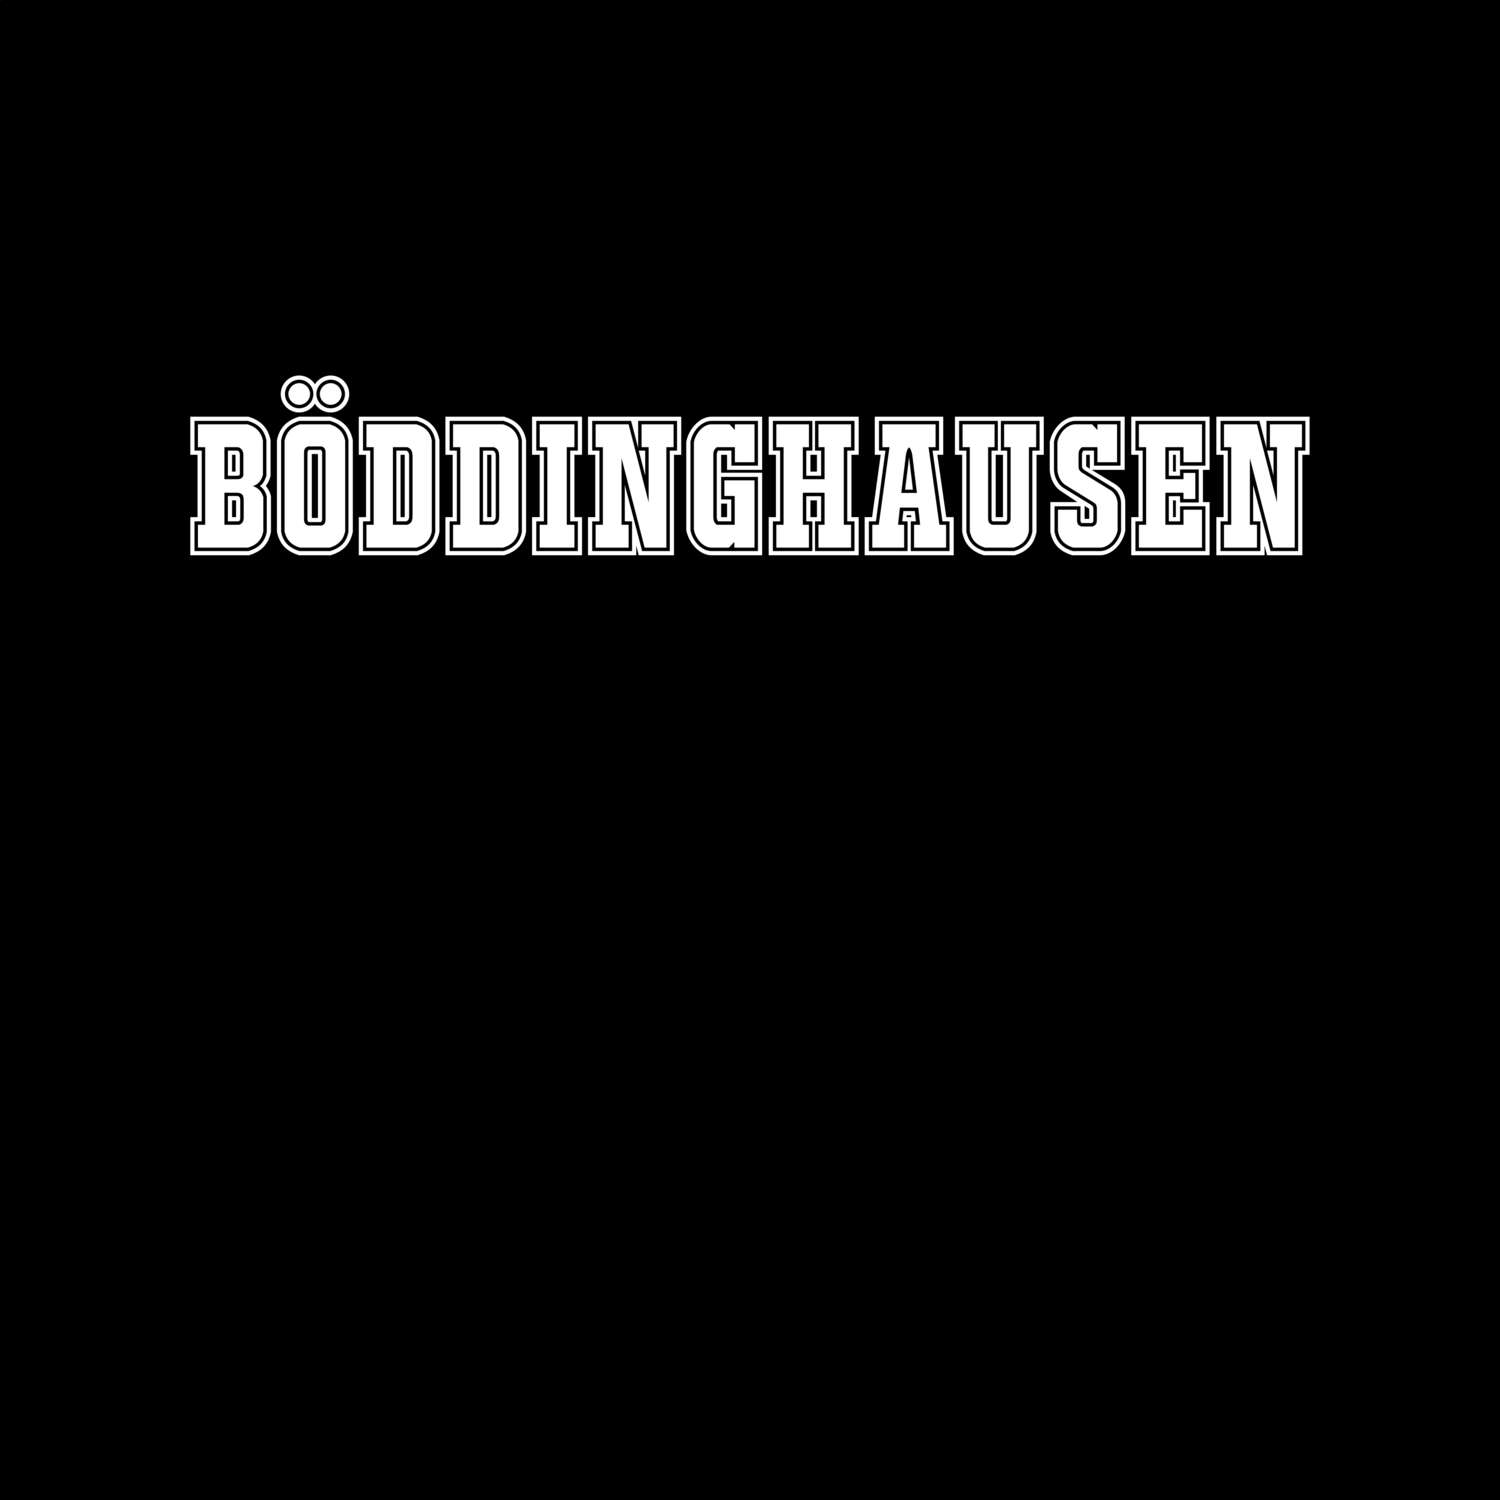 Böddinghausen T-Shirt »Classic«